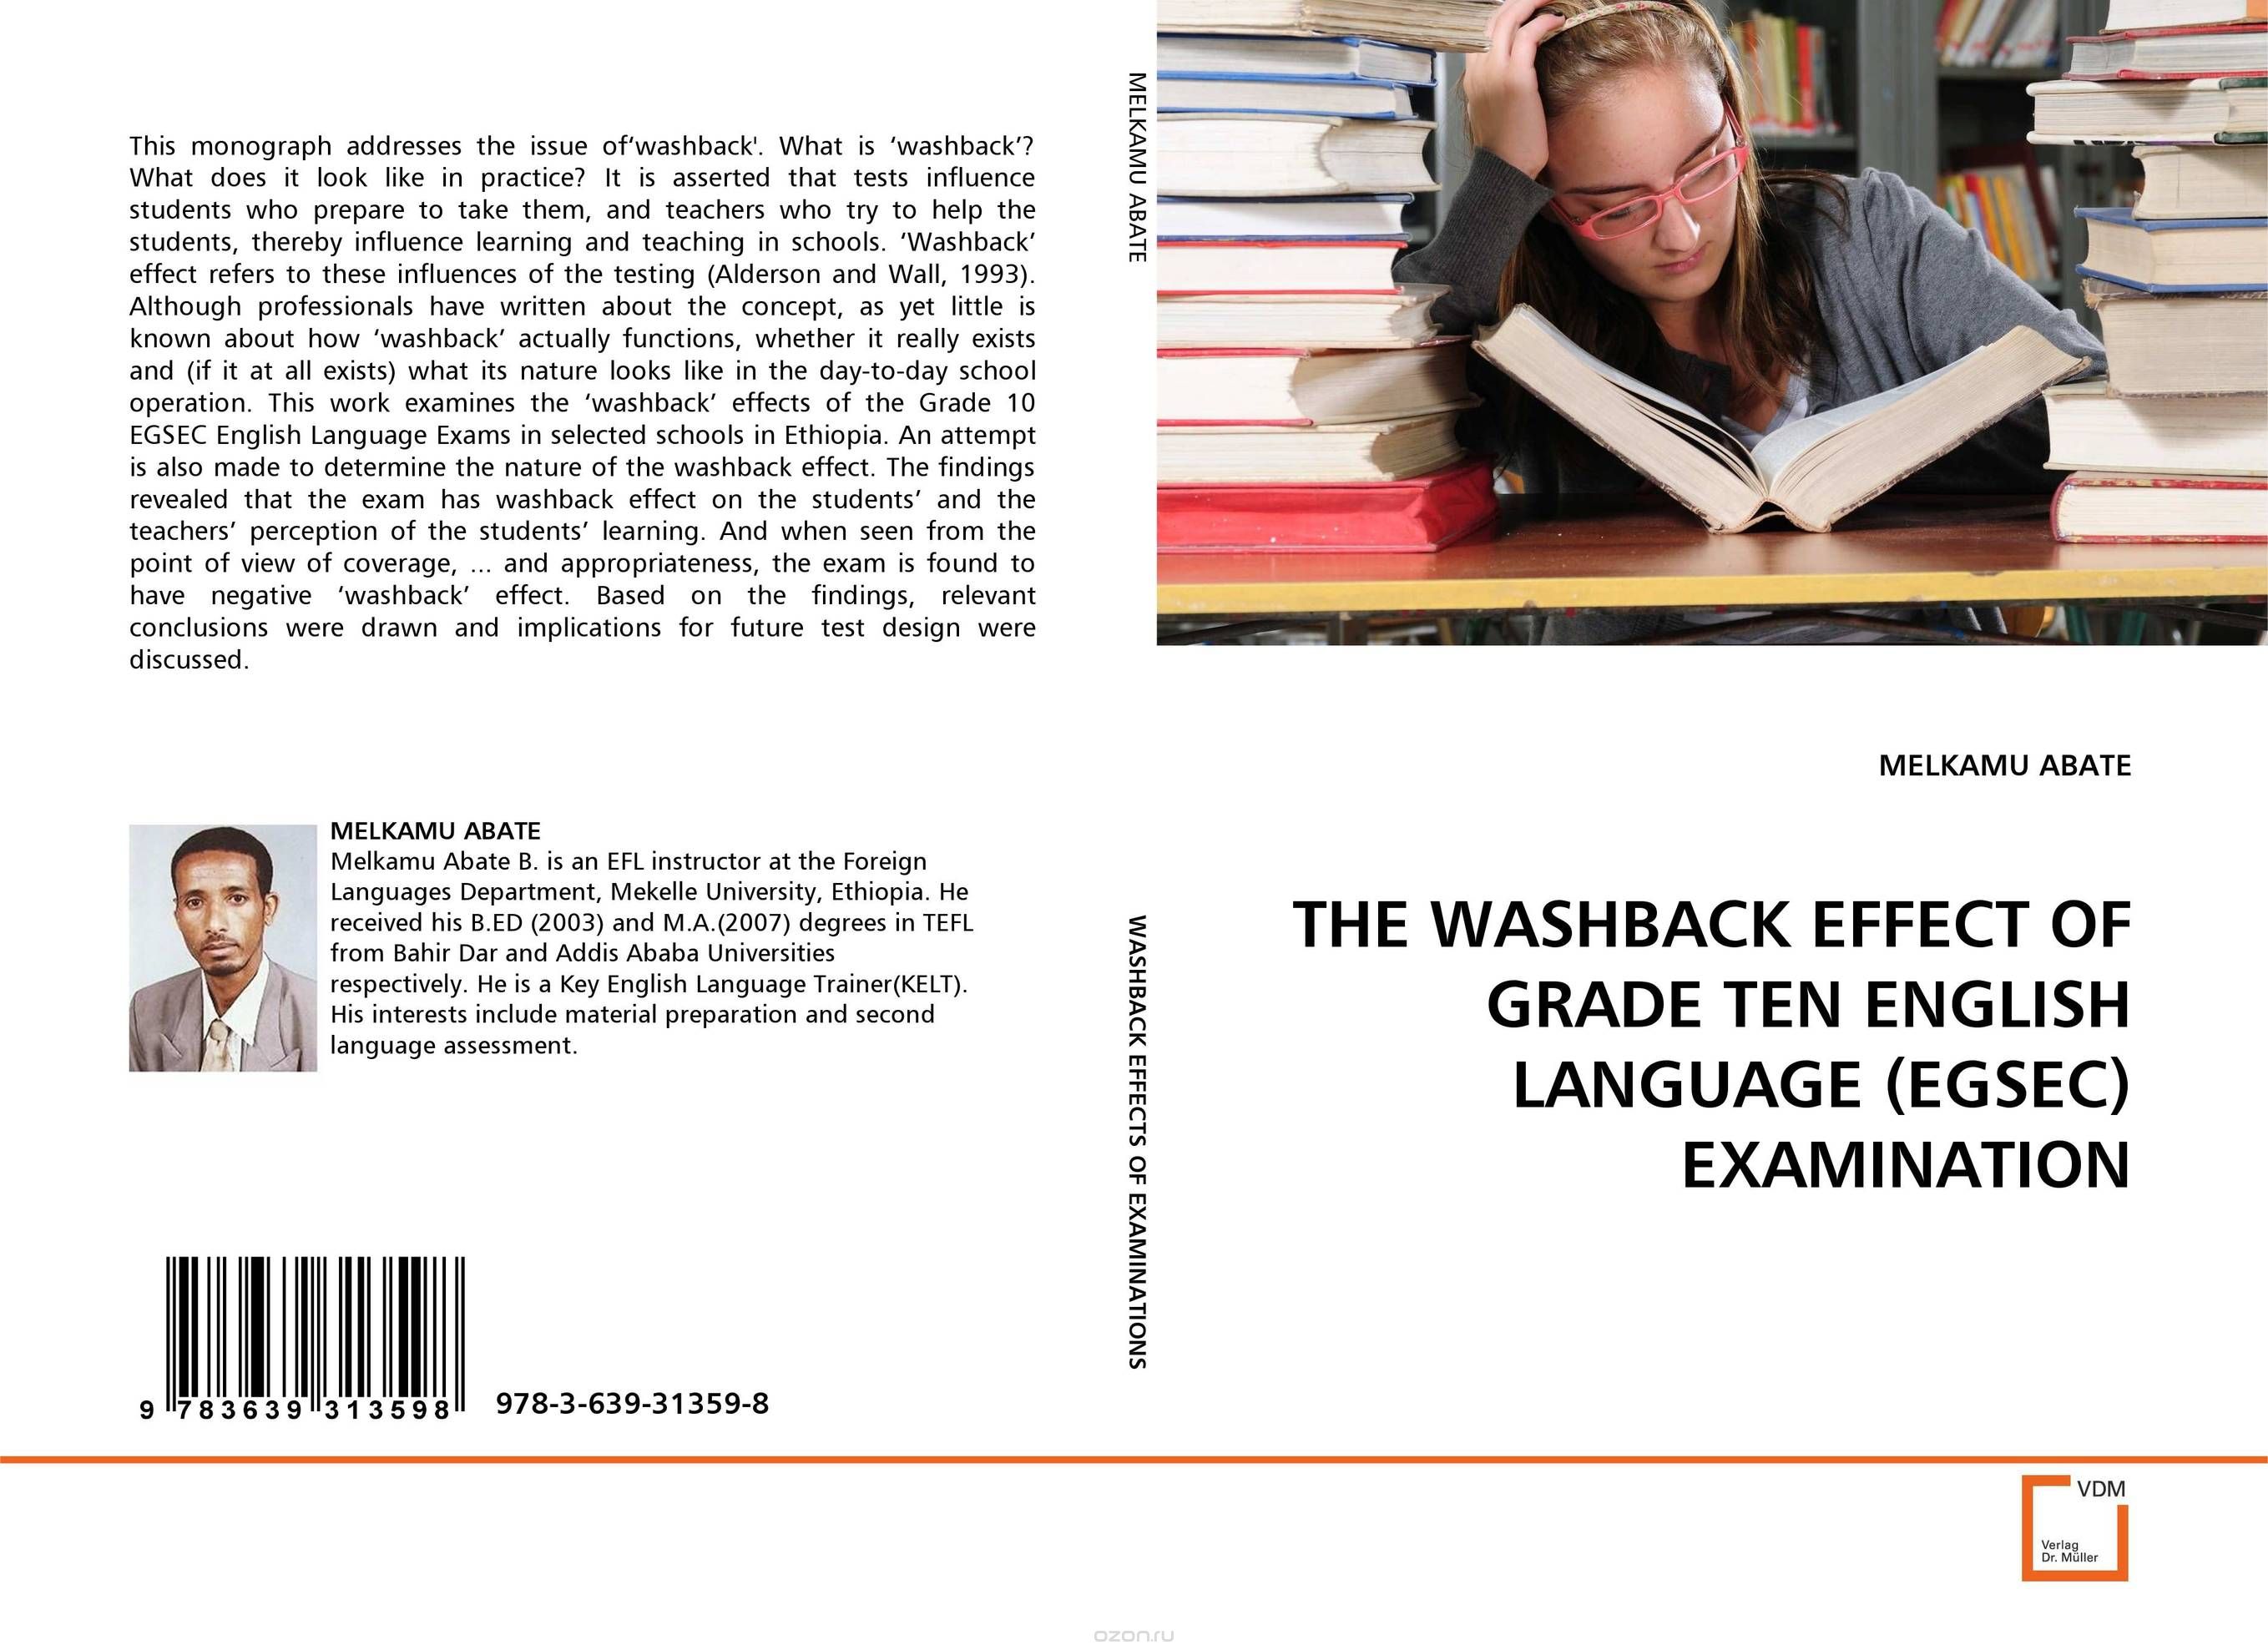 Скачать книгу "THE WASHBACK EFFECT OF GRADE TEN ENGLISH LANGUAGE (EGSEC) EXAMINATION"